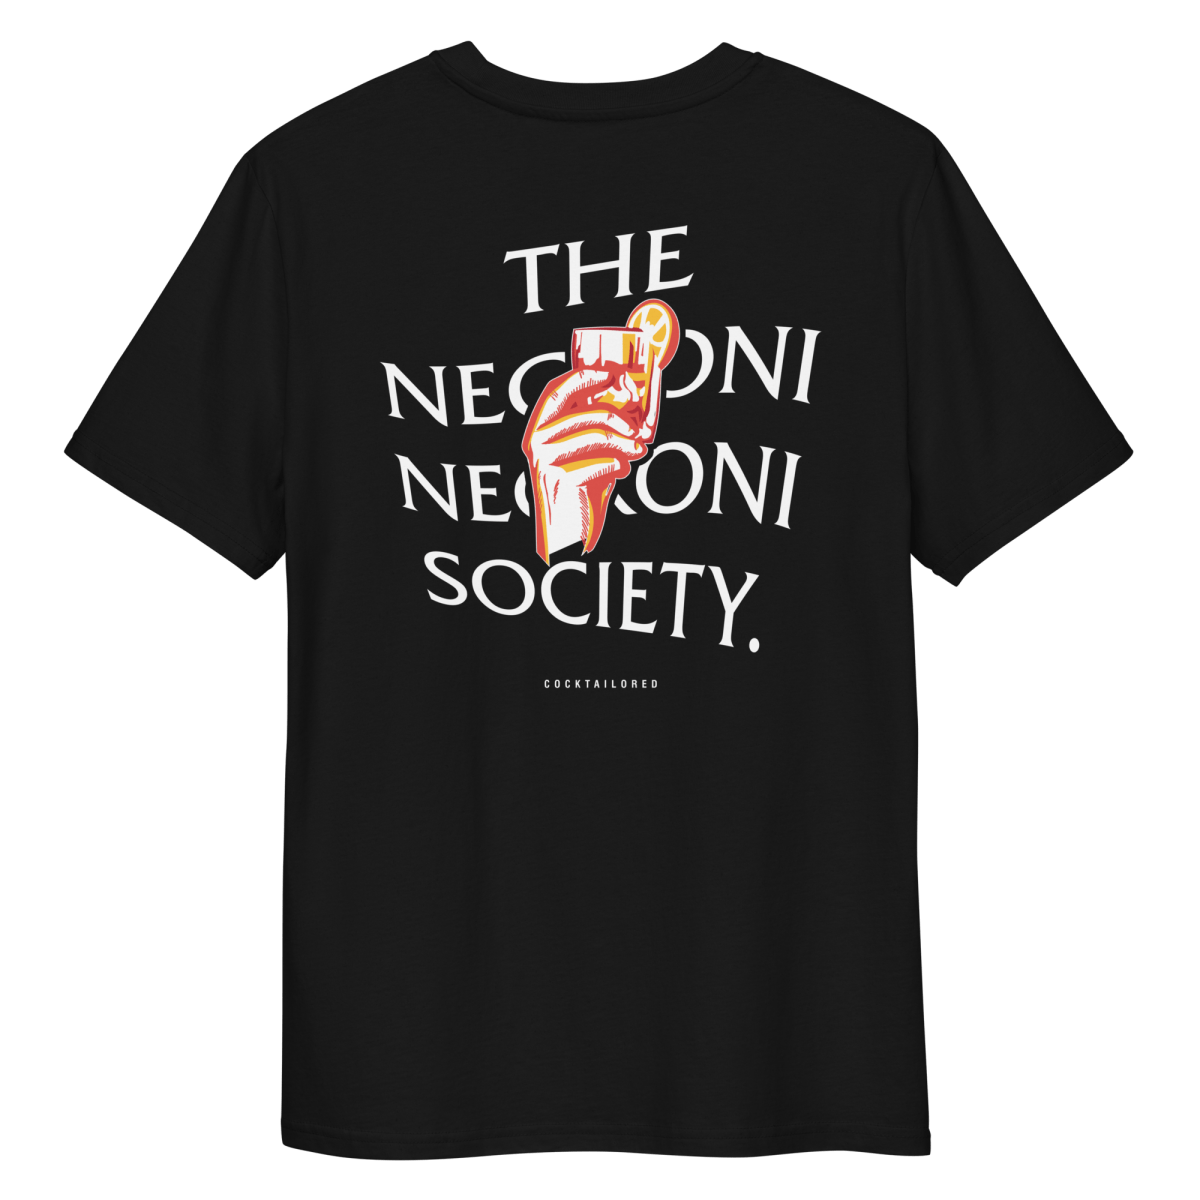 The Negroni Society organic t-shirt